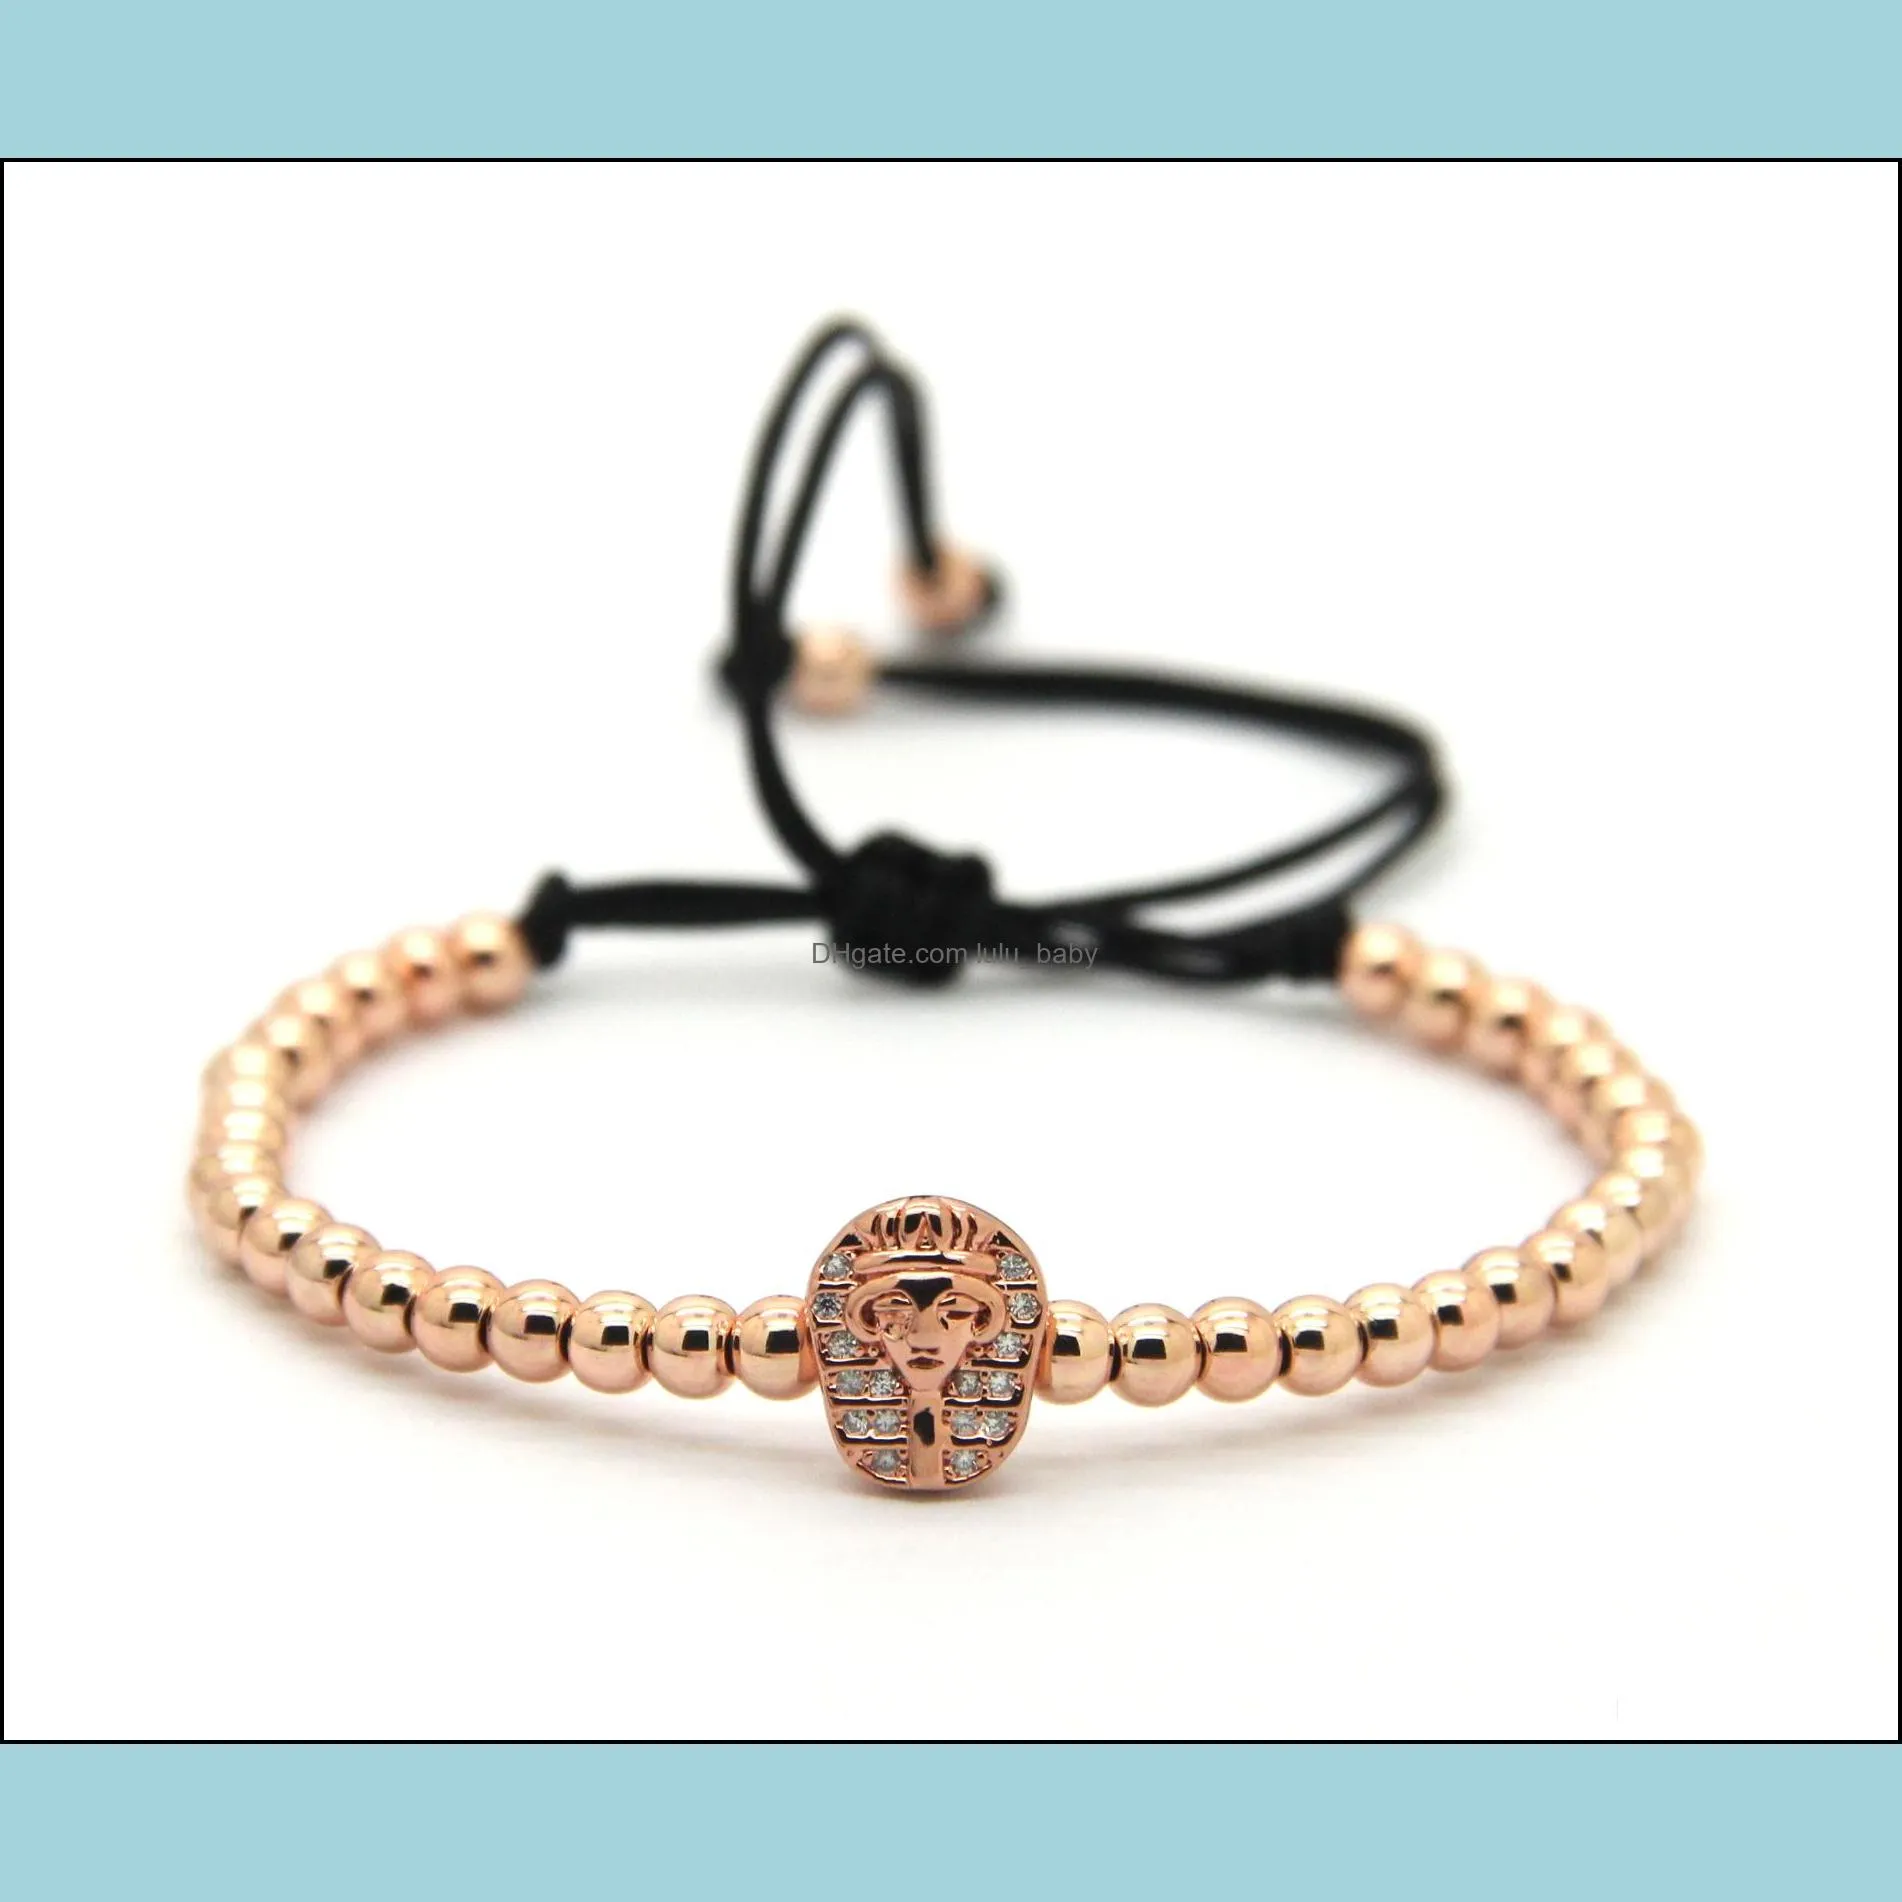 2016 arrival atolyewolf macrame bracelets wholesale 4mm bronze beads with tutankhamun cz beads bracelets mens jewelry gift